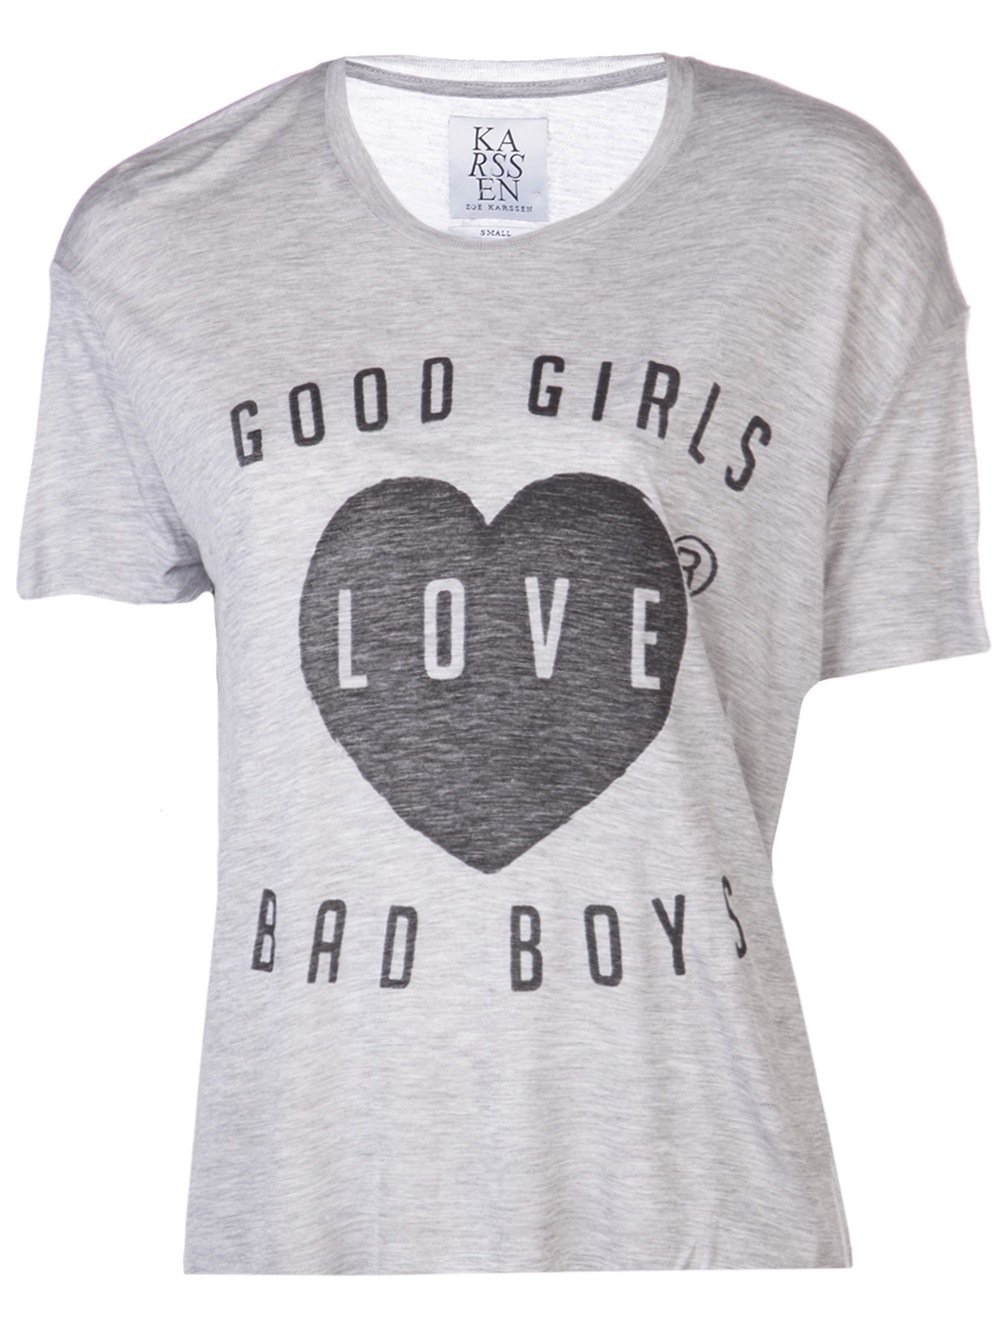 Why good girls love bad boys